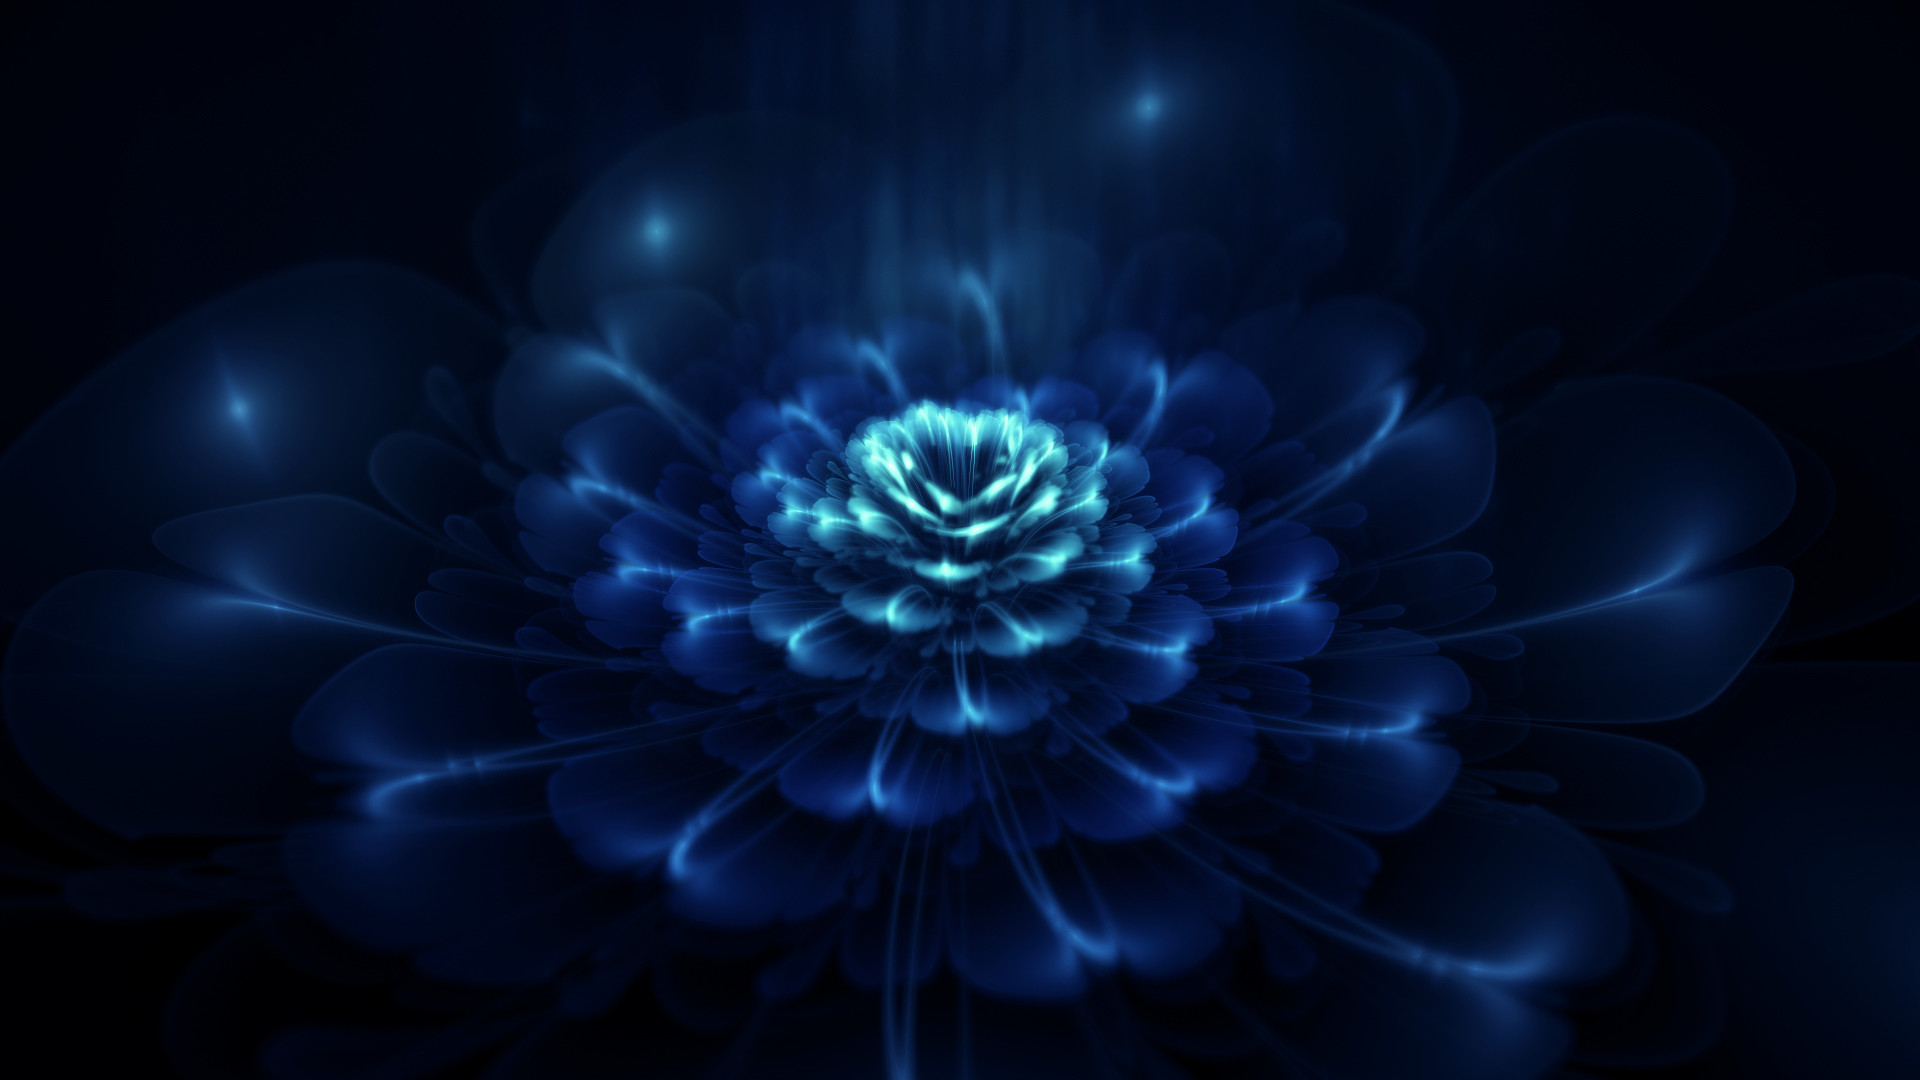 1920x1080 Midwinter blue abstract flower wallpaper from Dark wallpapers